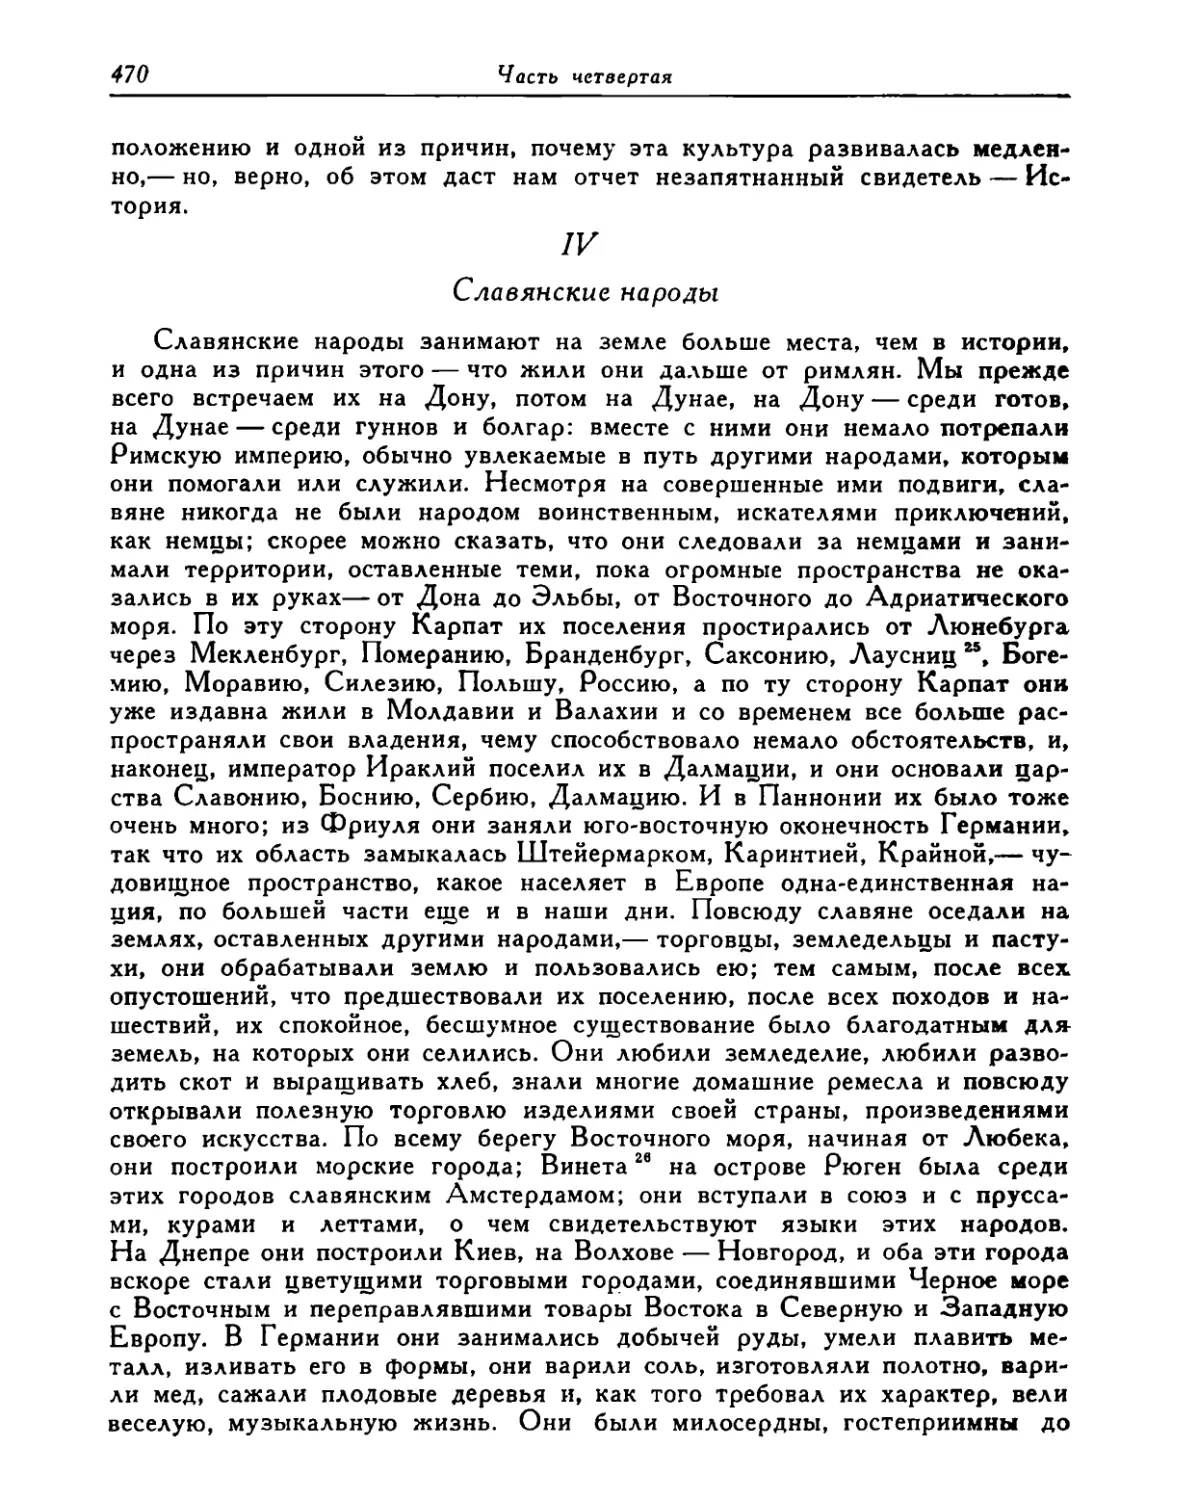 IV. Славянские народы